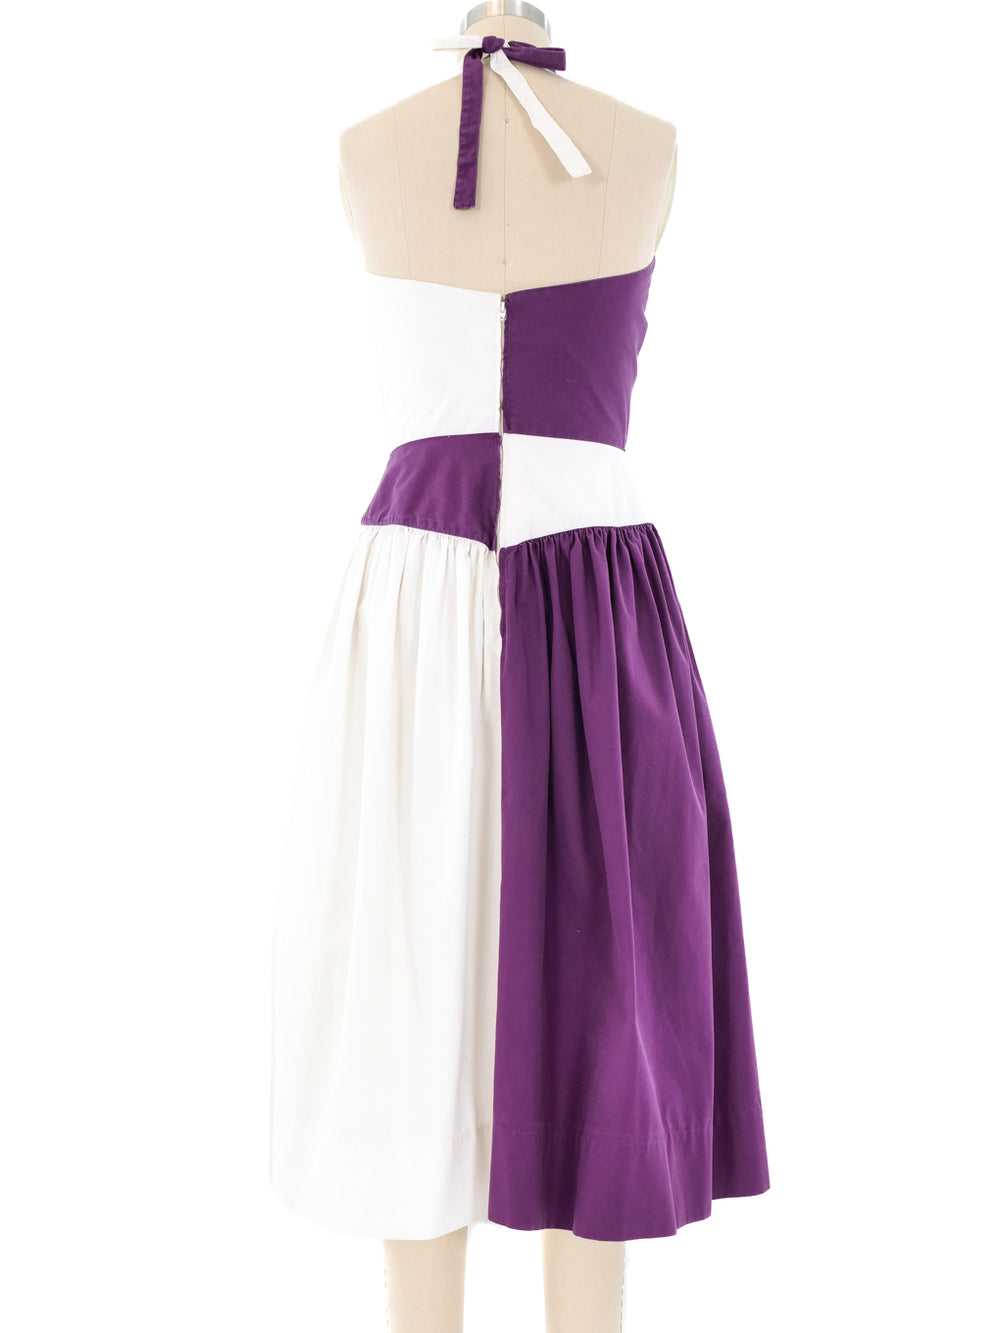 Adele Simpson Colorblock Halter Dress - image 4